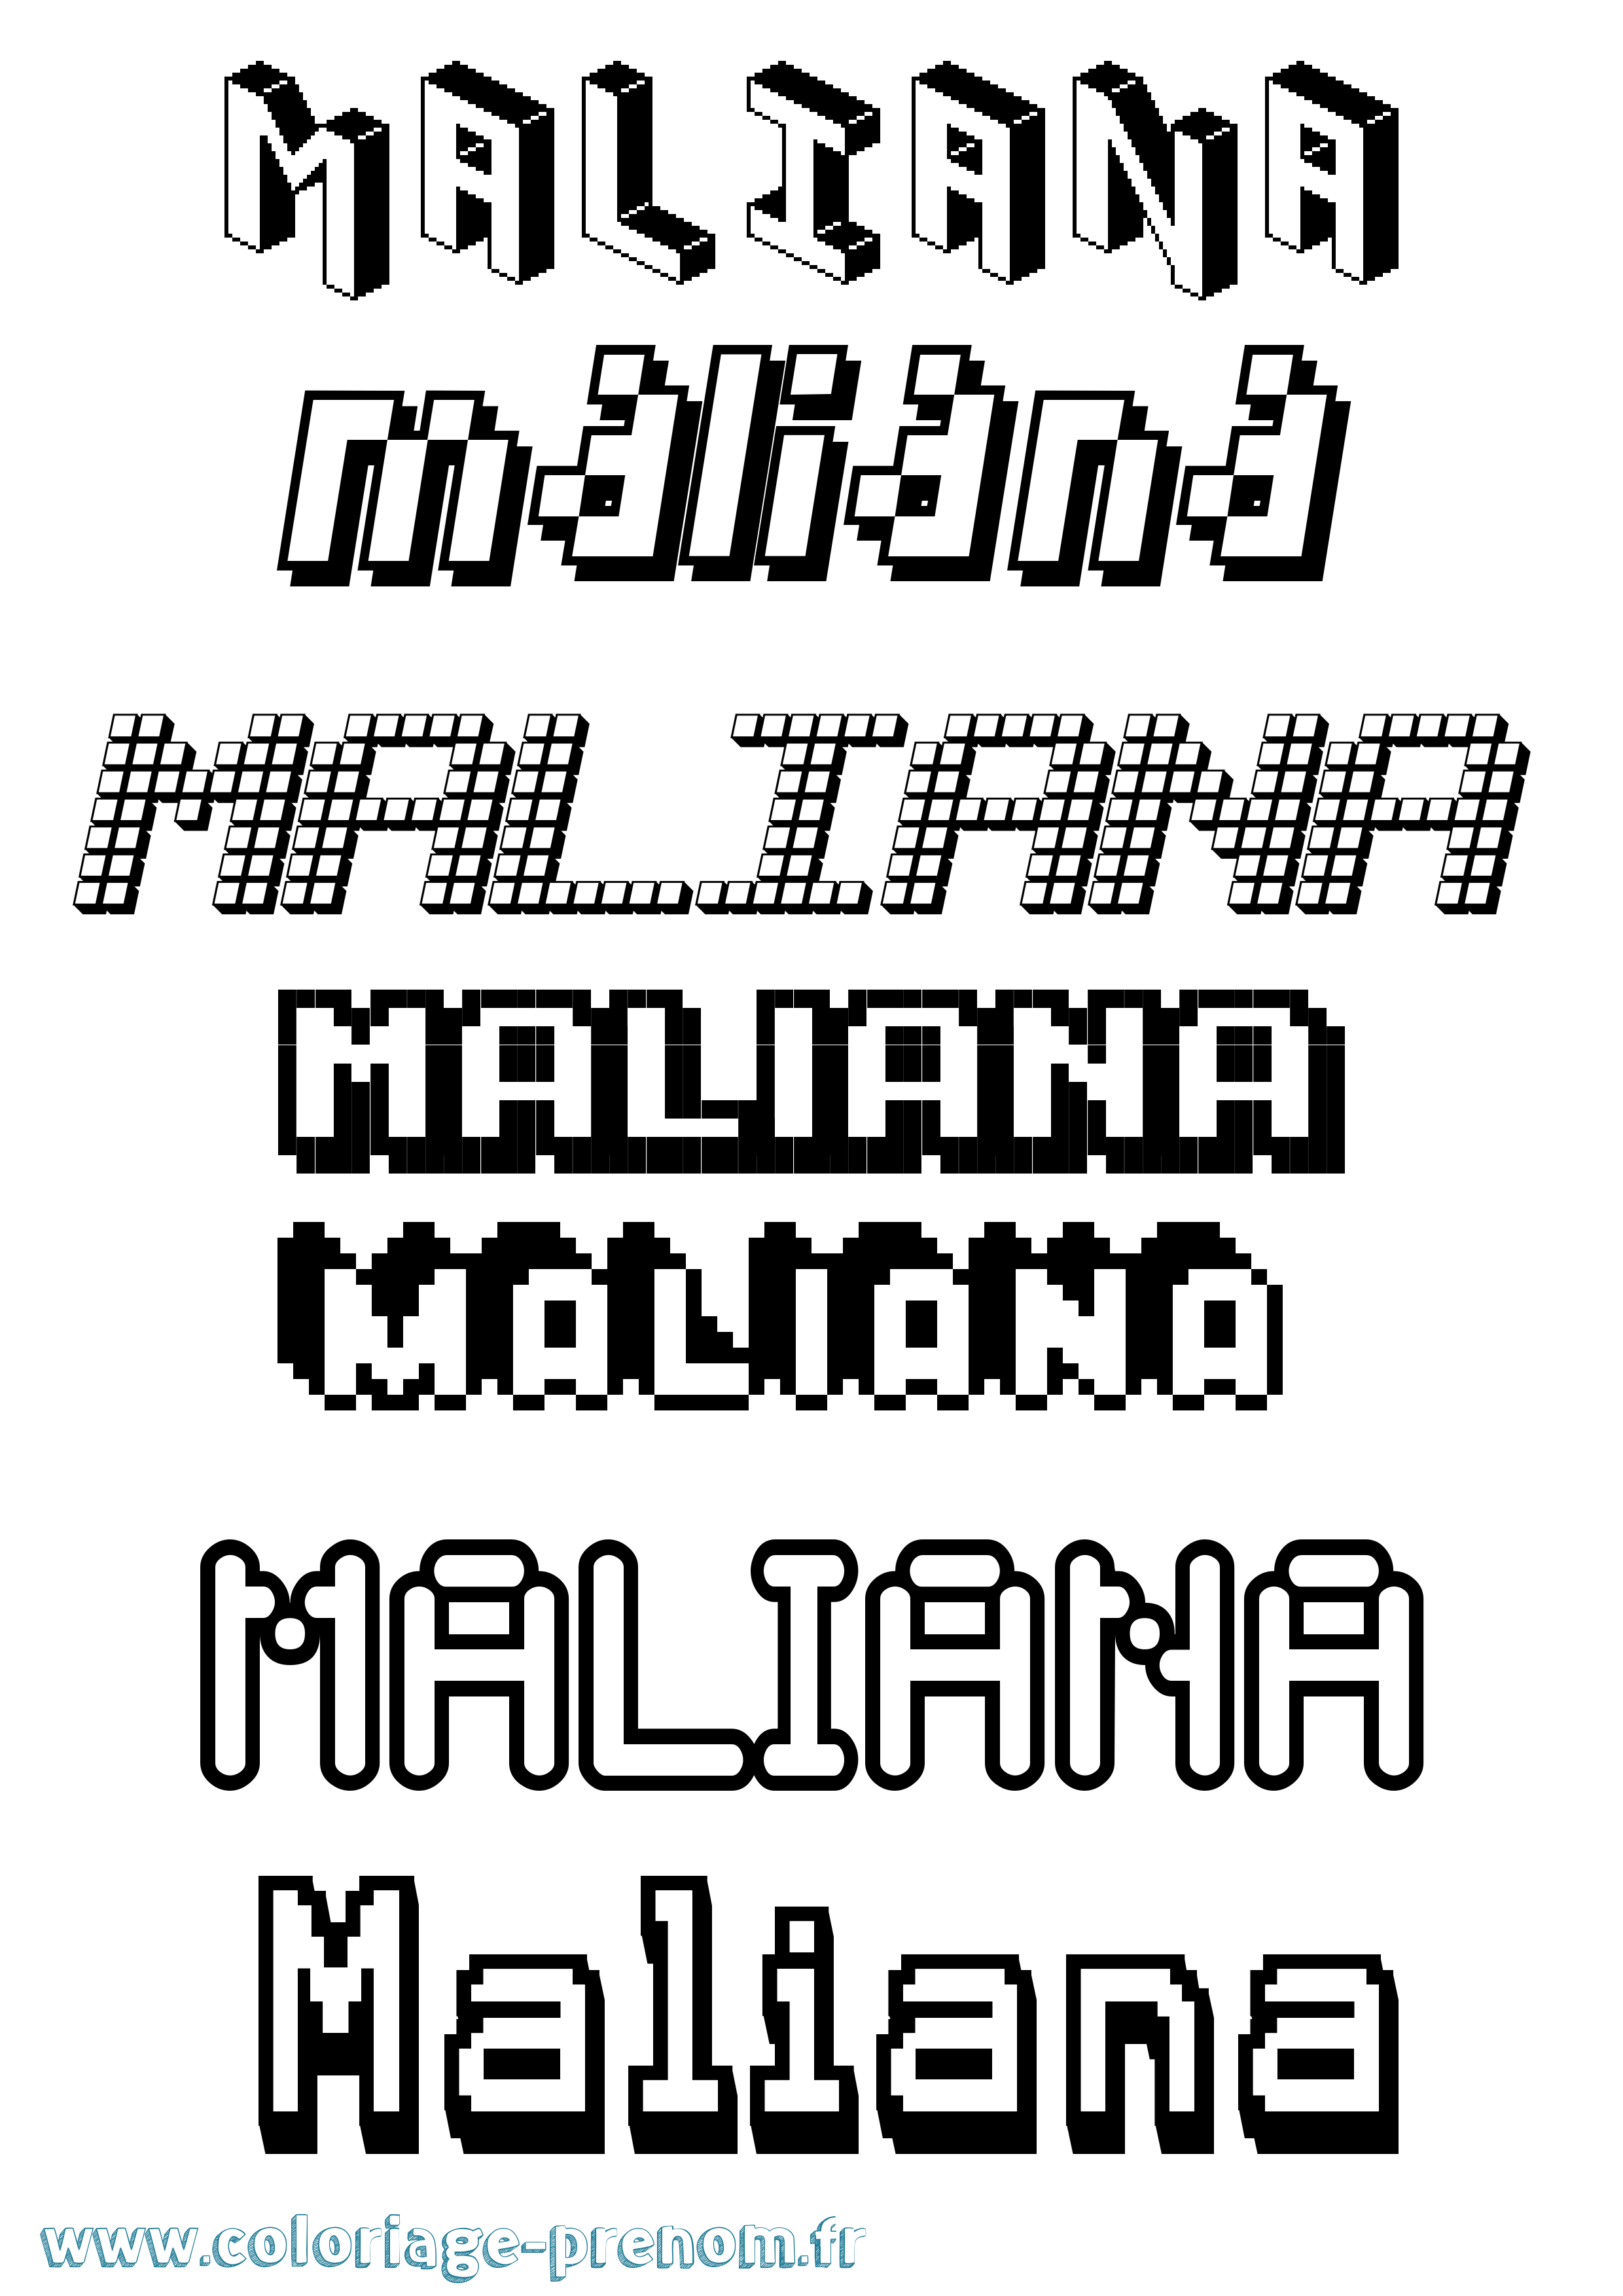 Coloriage prénom Maliana Pixel